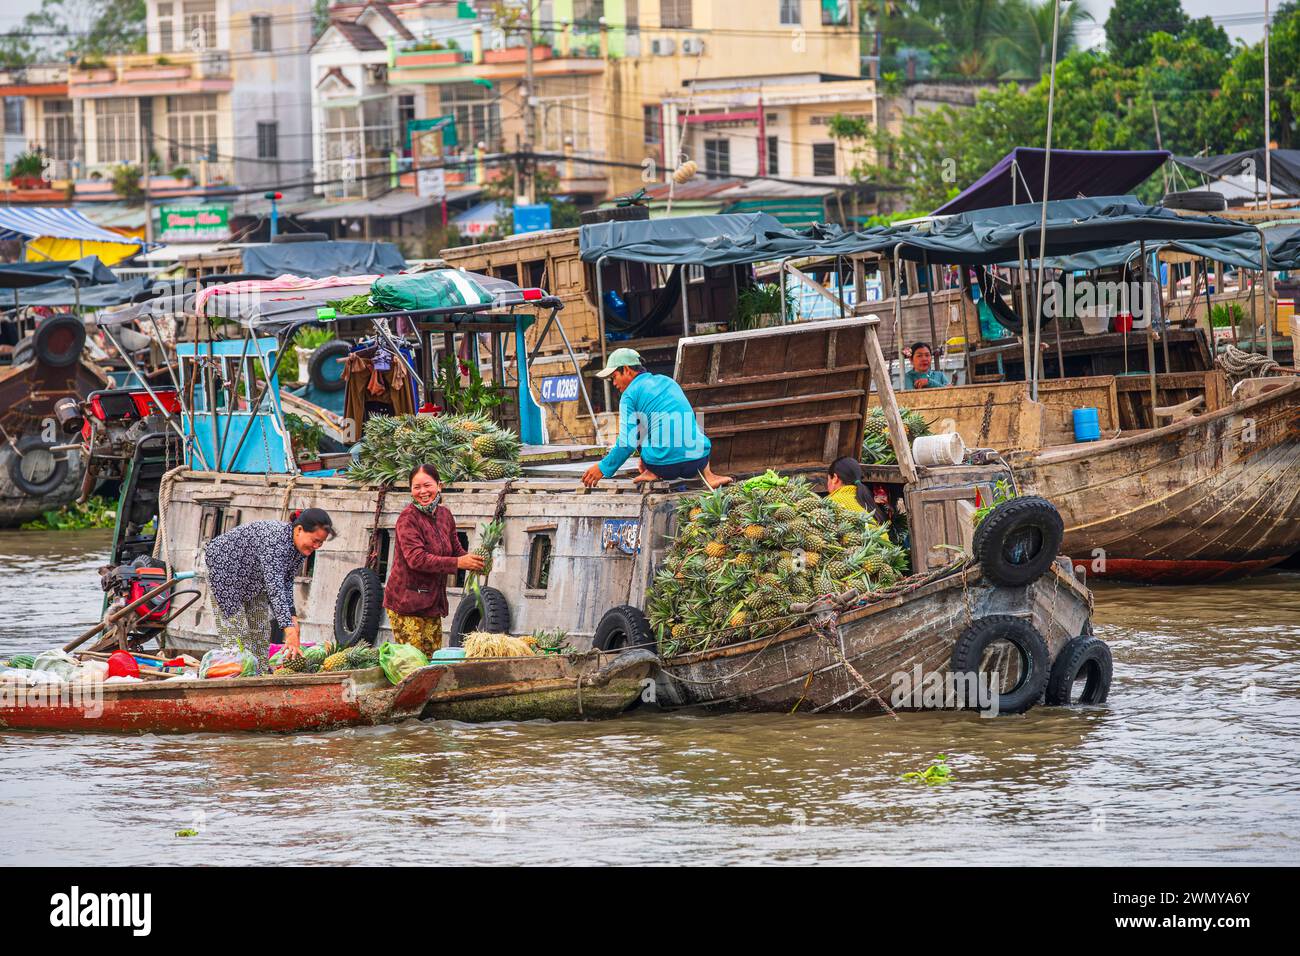 Vietnam, Mekong Delta, Cai Rang district, Cai Rang floating market on Can Tho river Stock Photo